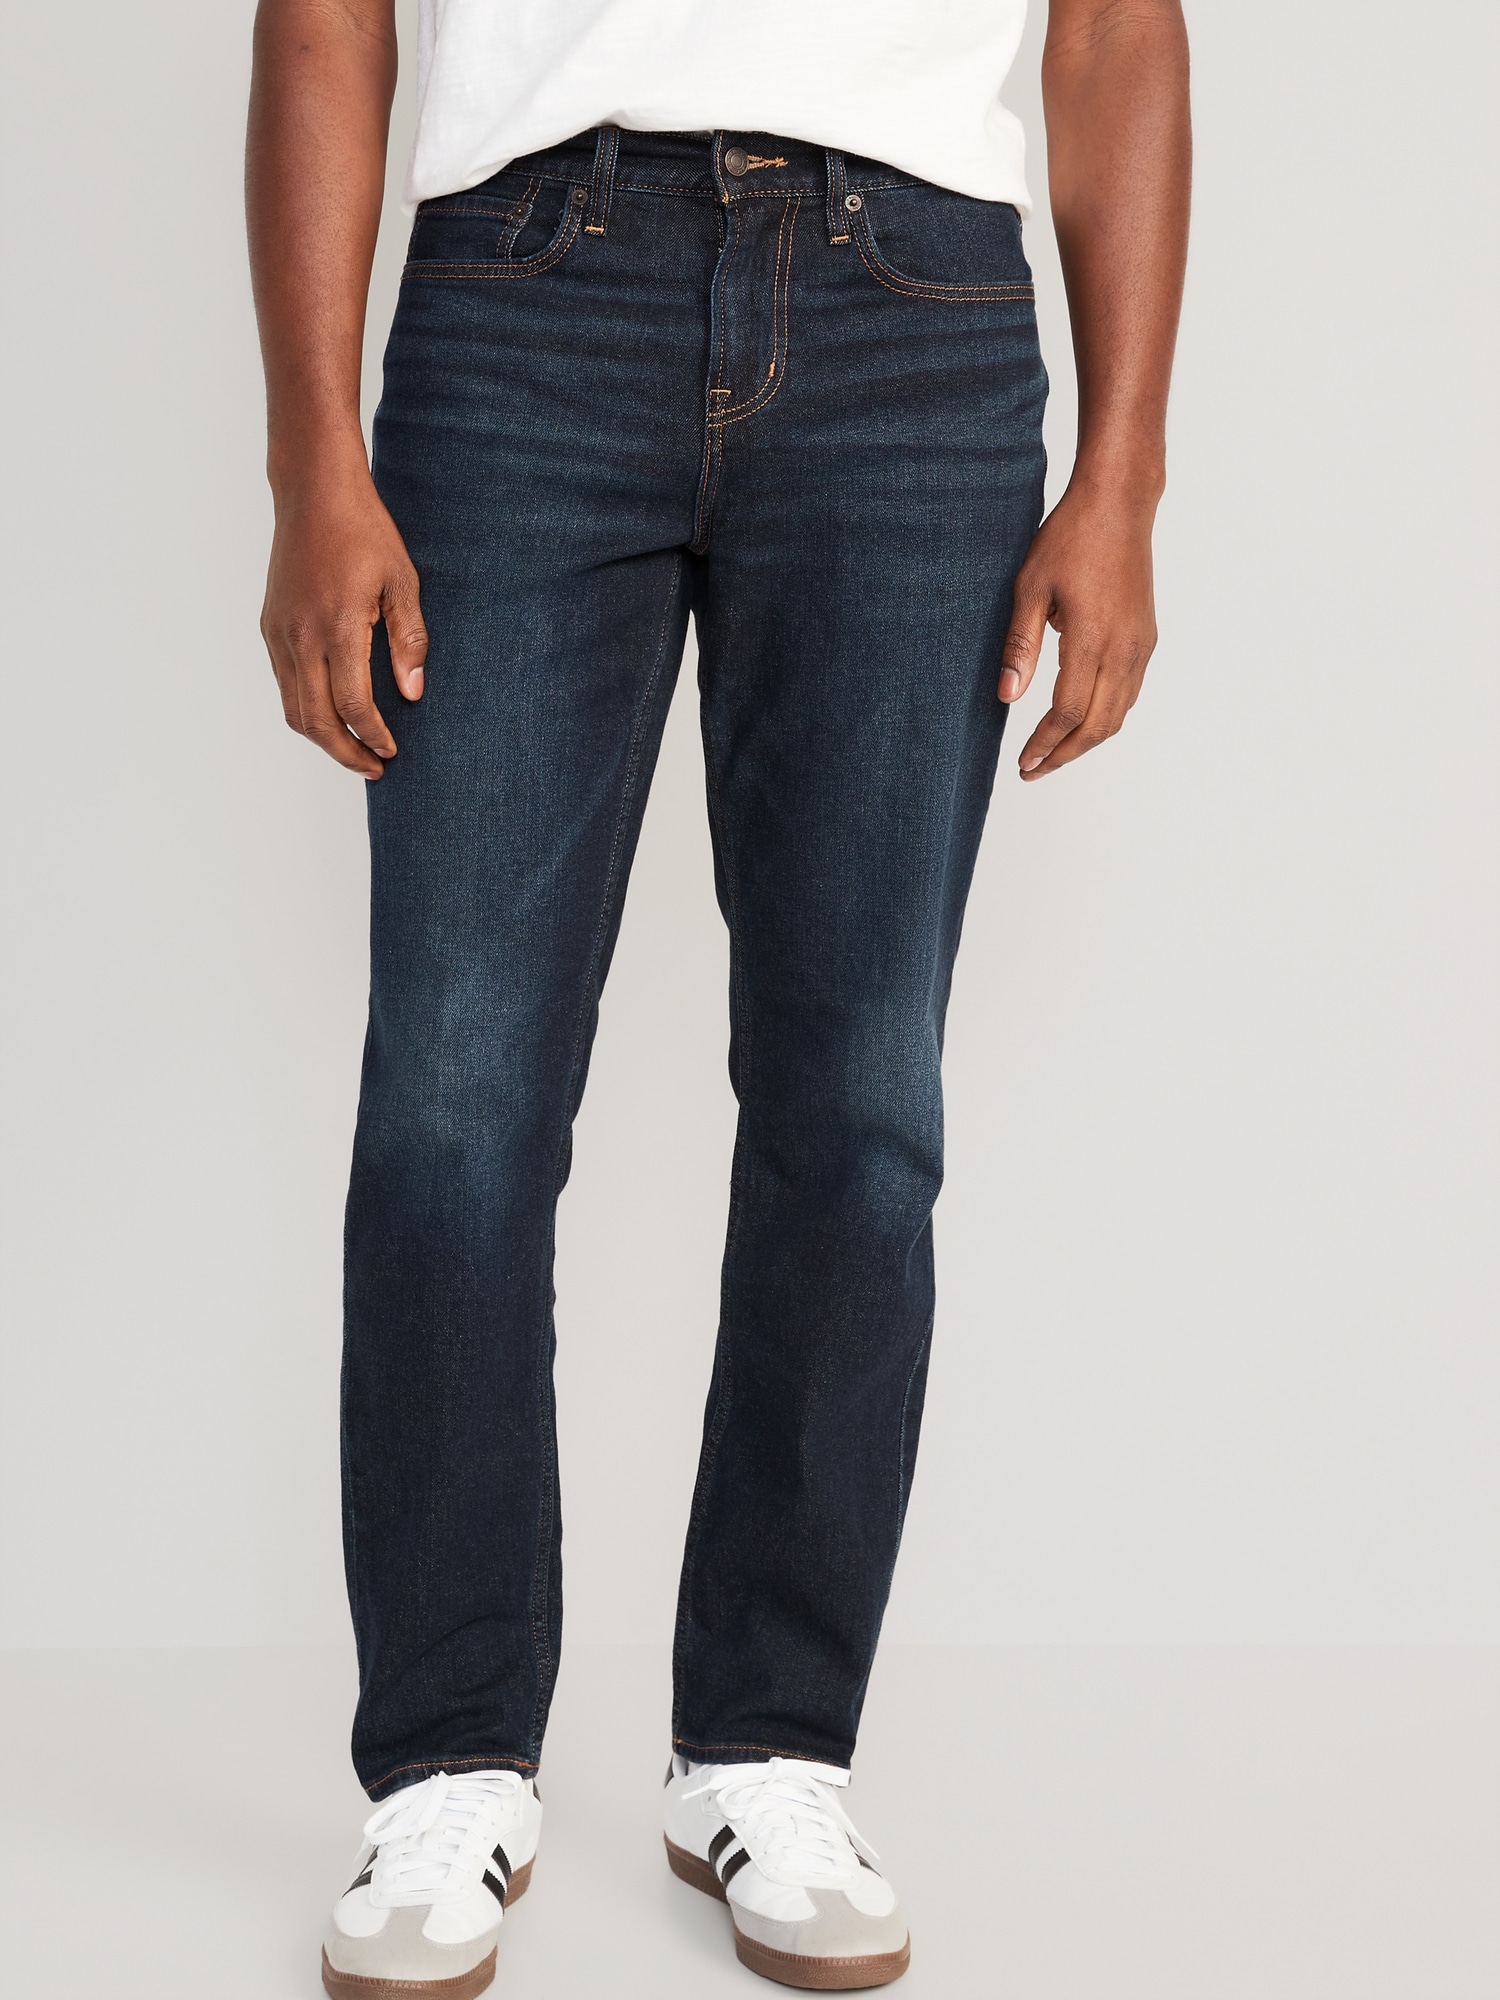 Taper Dark-Wash Jeans for Men | Old